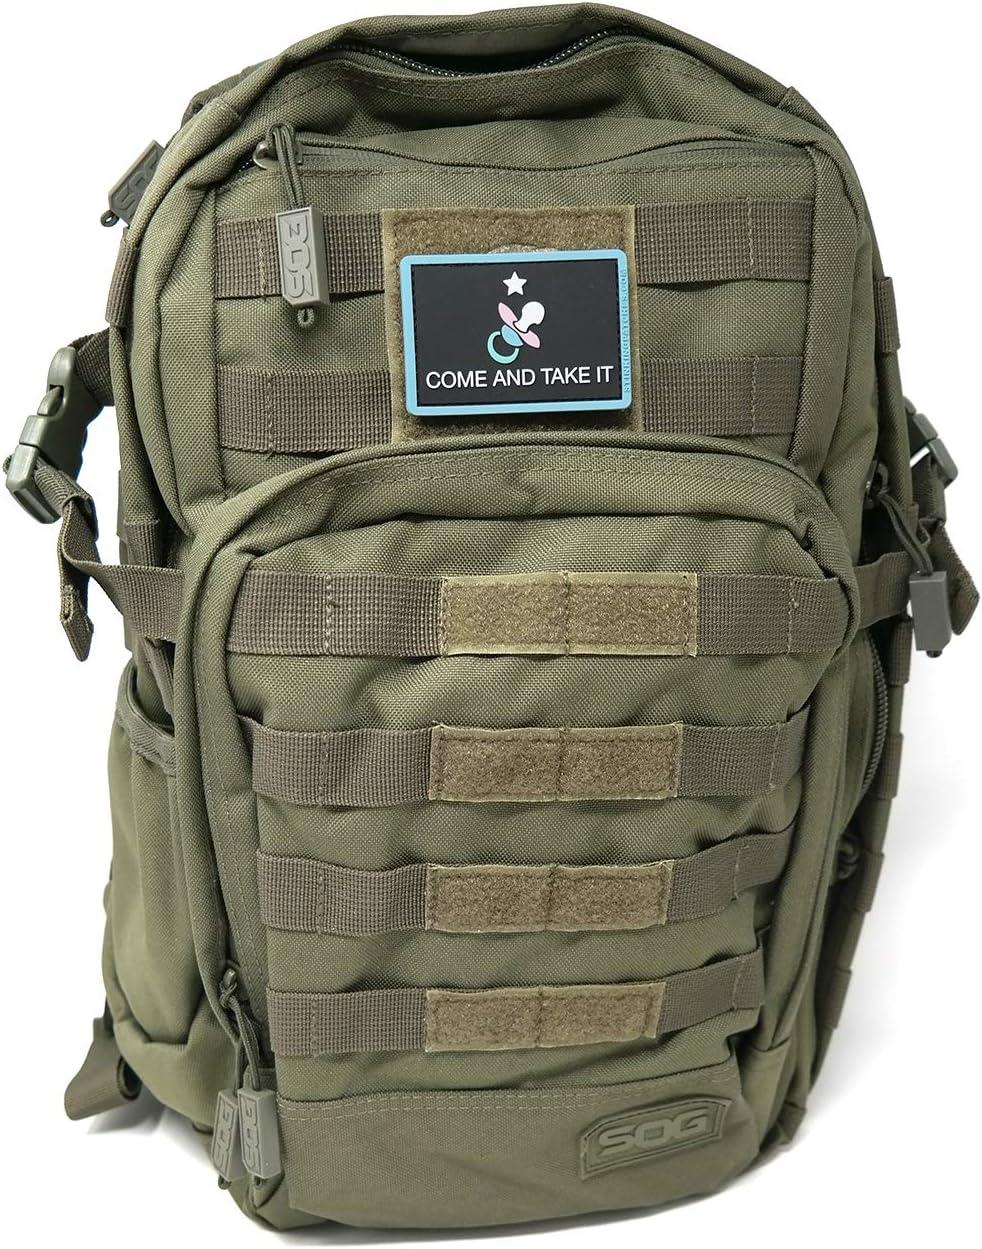 Tactical Bag Patch 